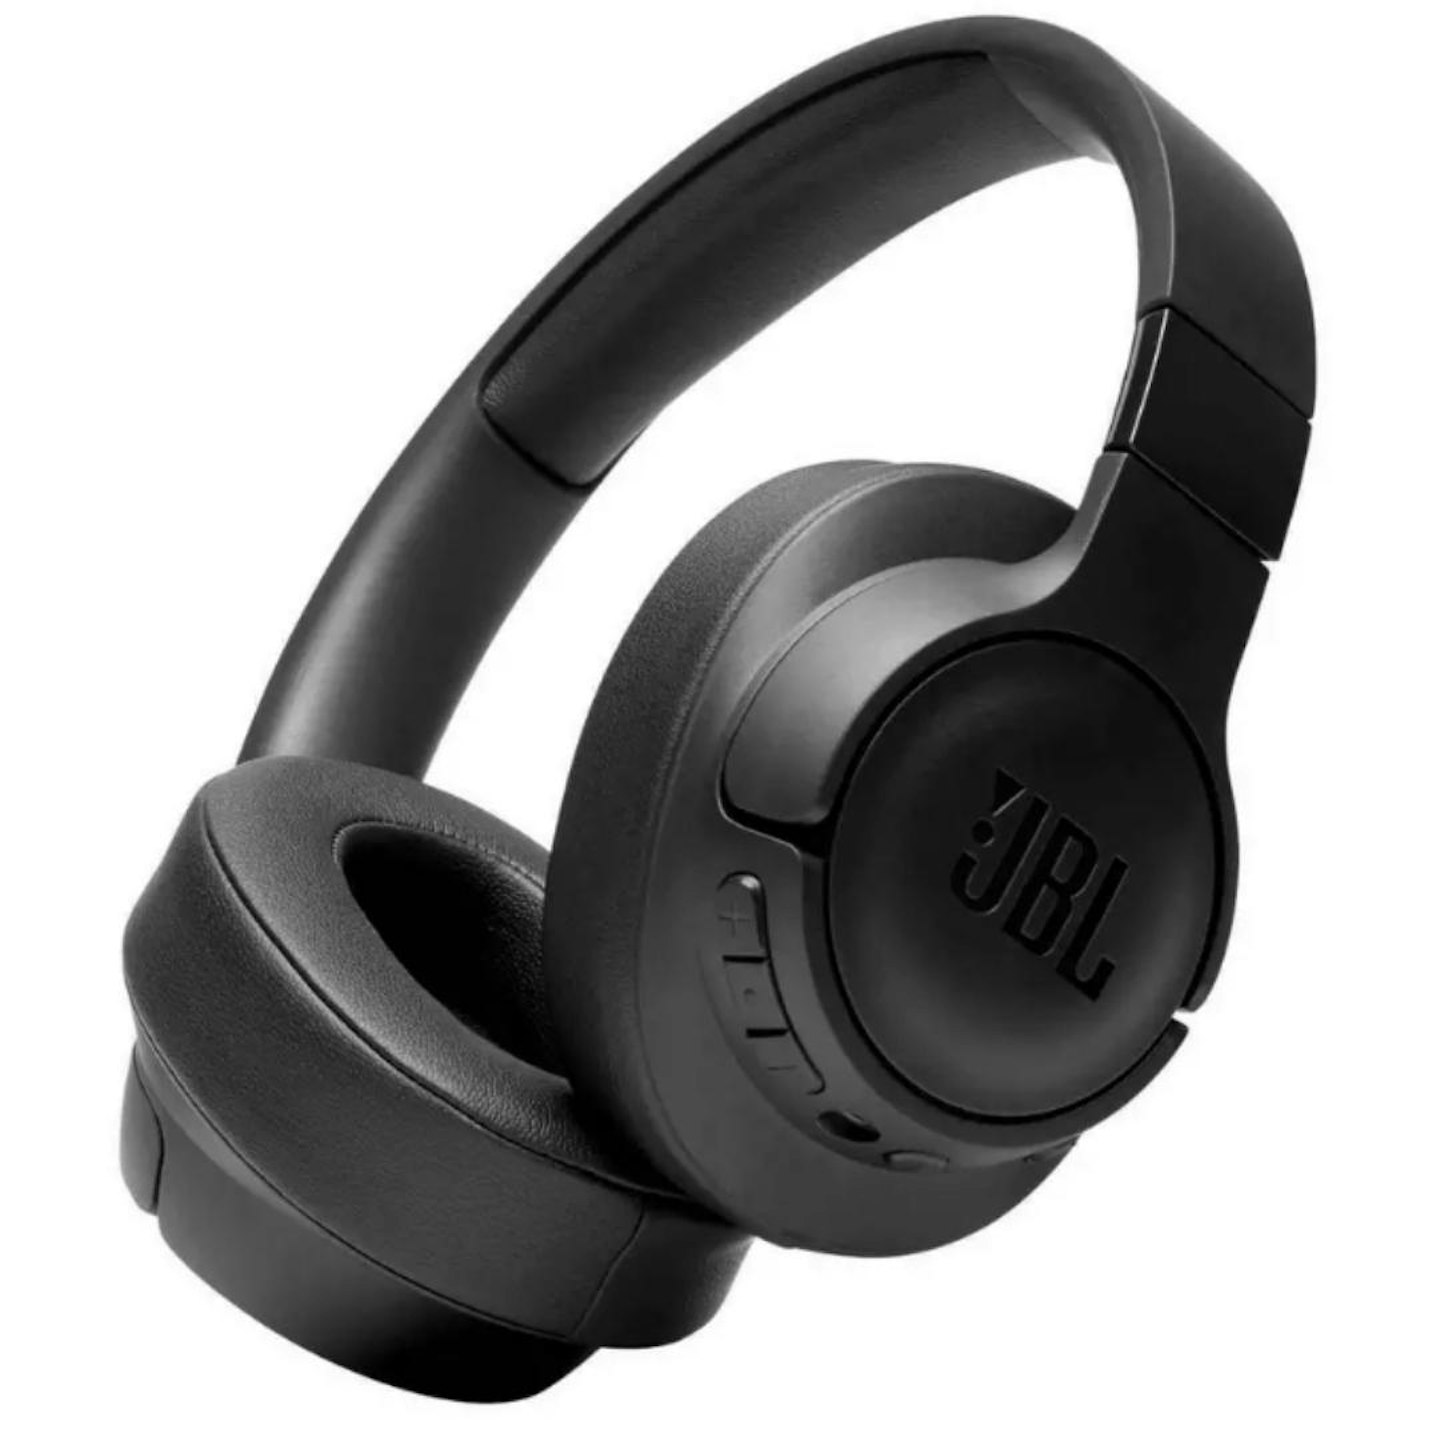 JBL Tune 760NC On-Ear Wireless Headphones - Black